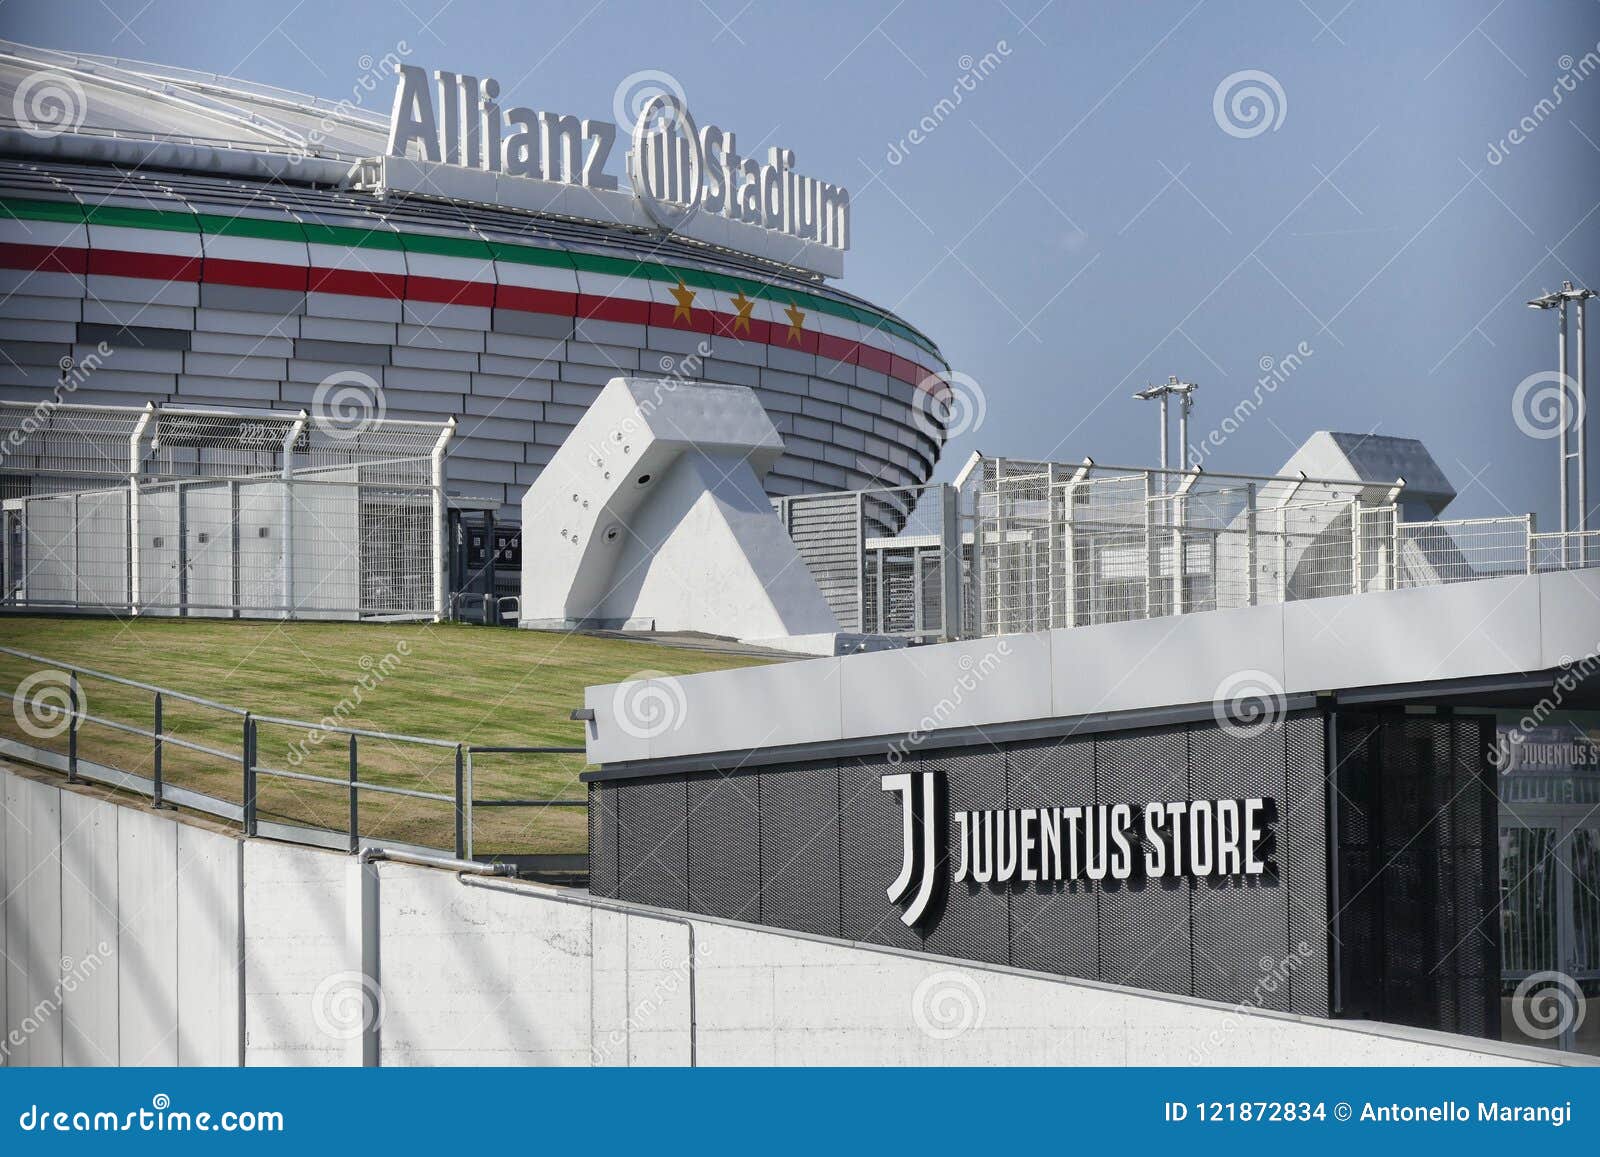 Juventus Fc Stadium Sponsored By Allianz Editorial Stock